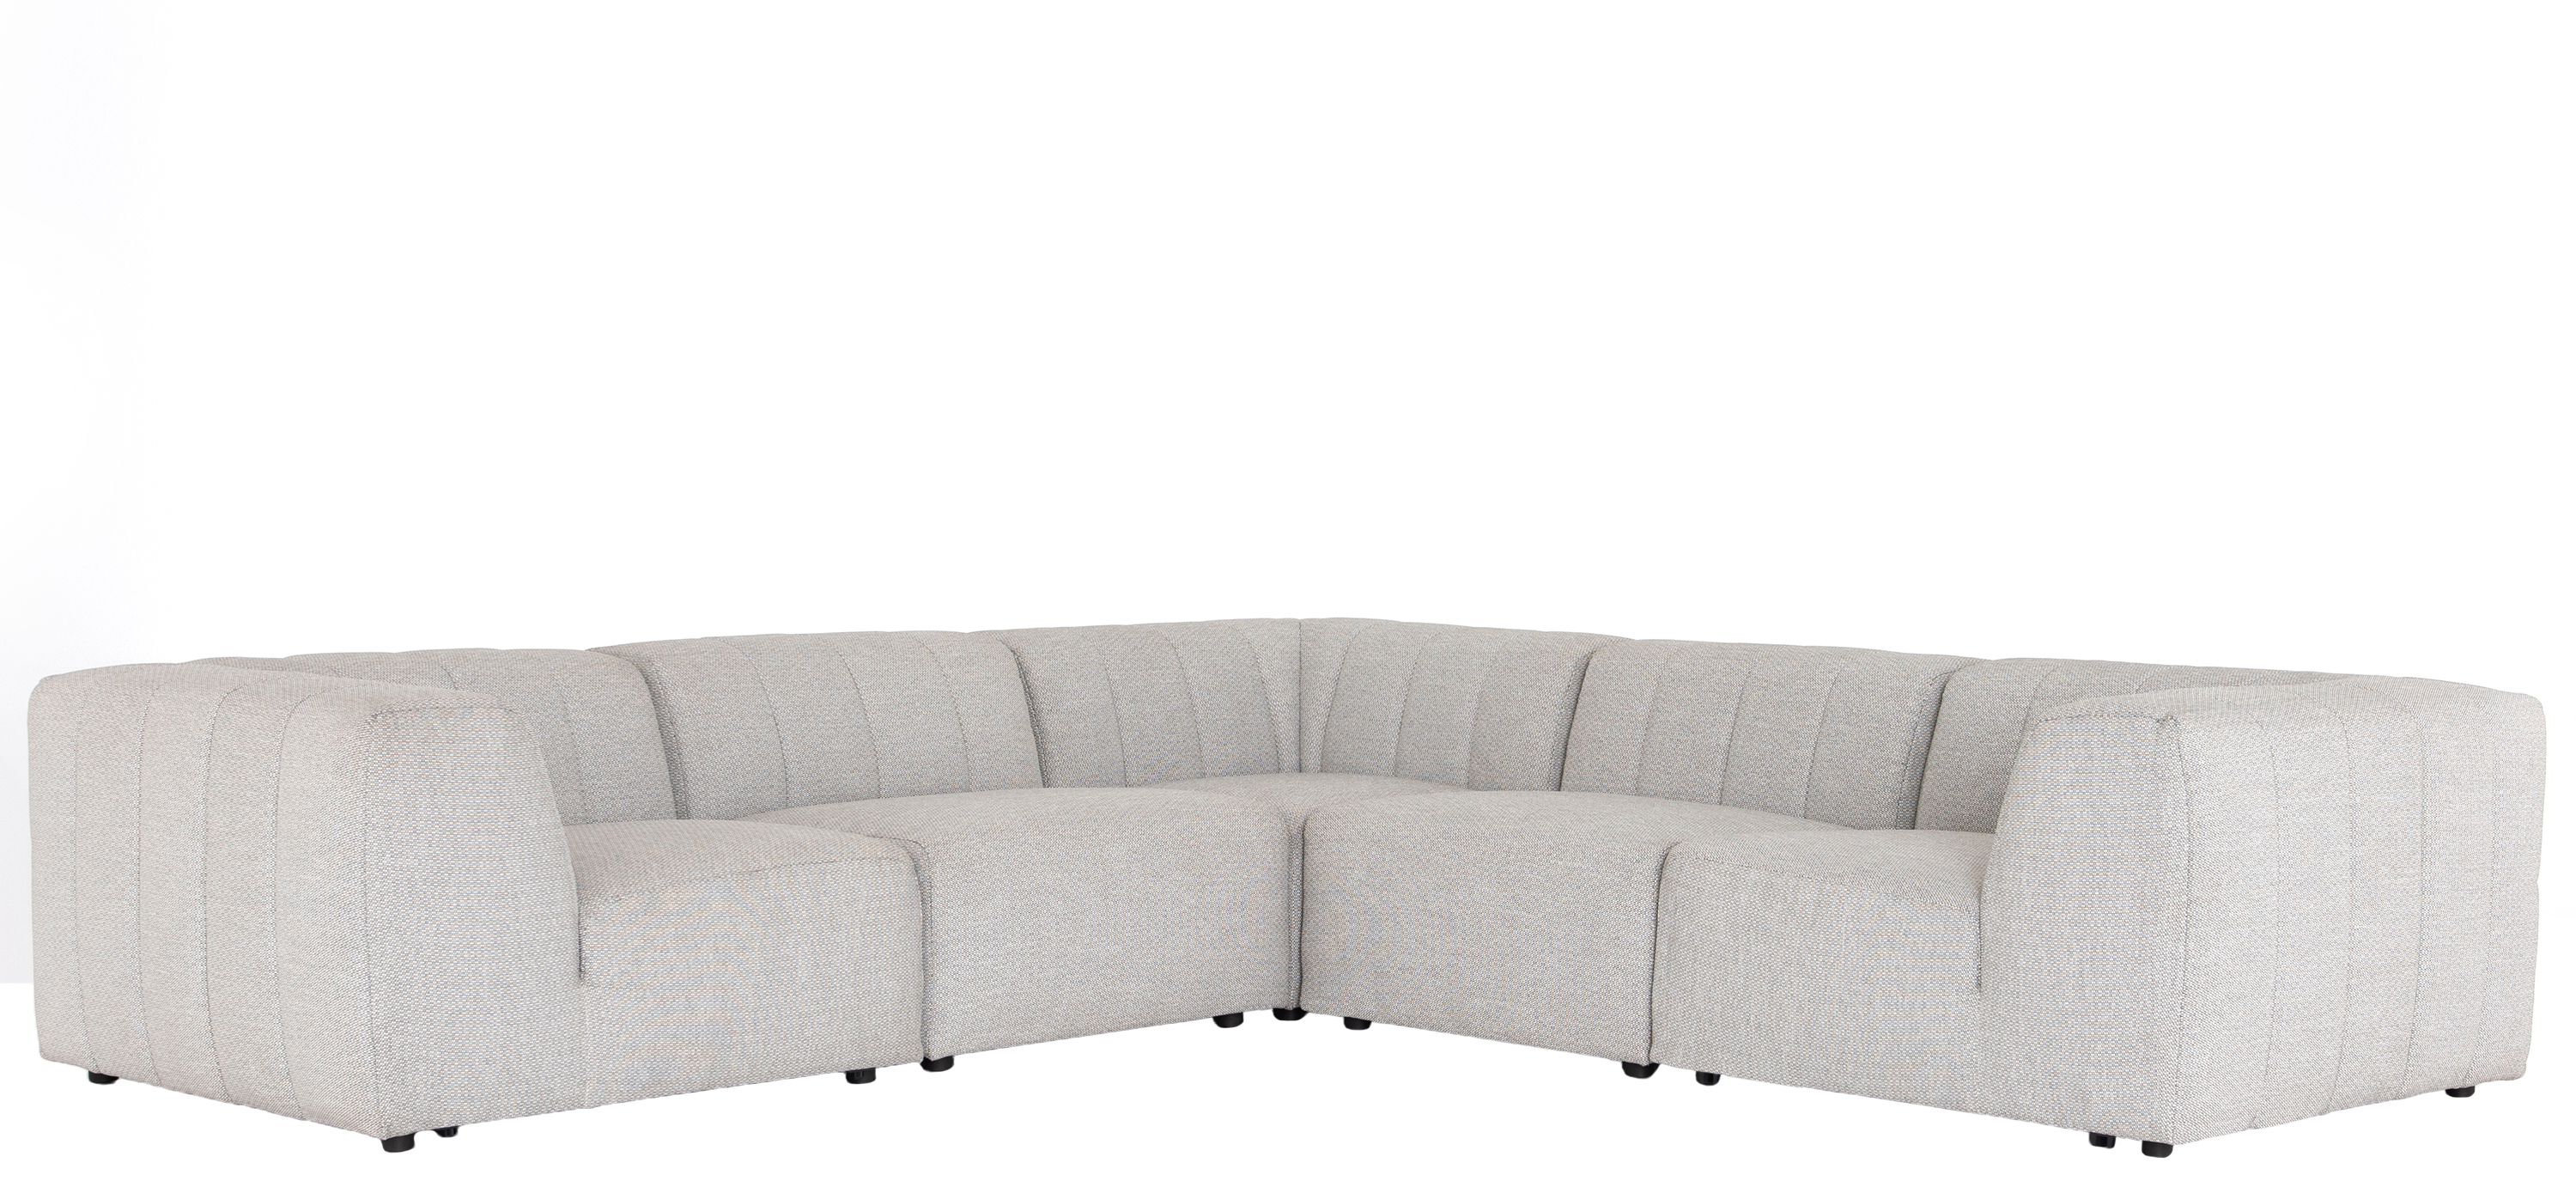 Solano 5-pc. Outdoor Sectional Sofa